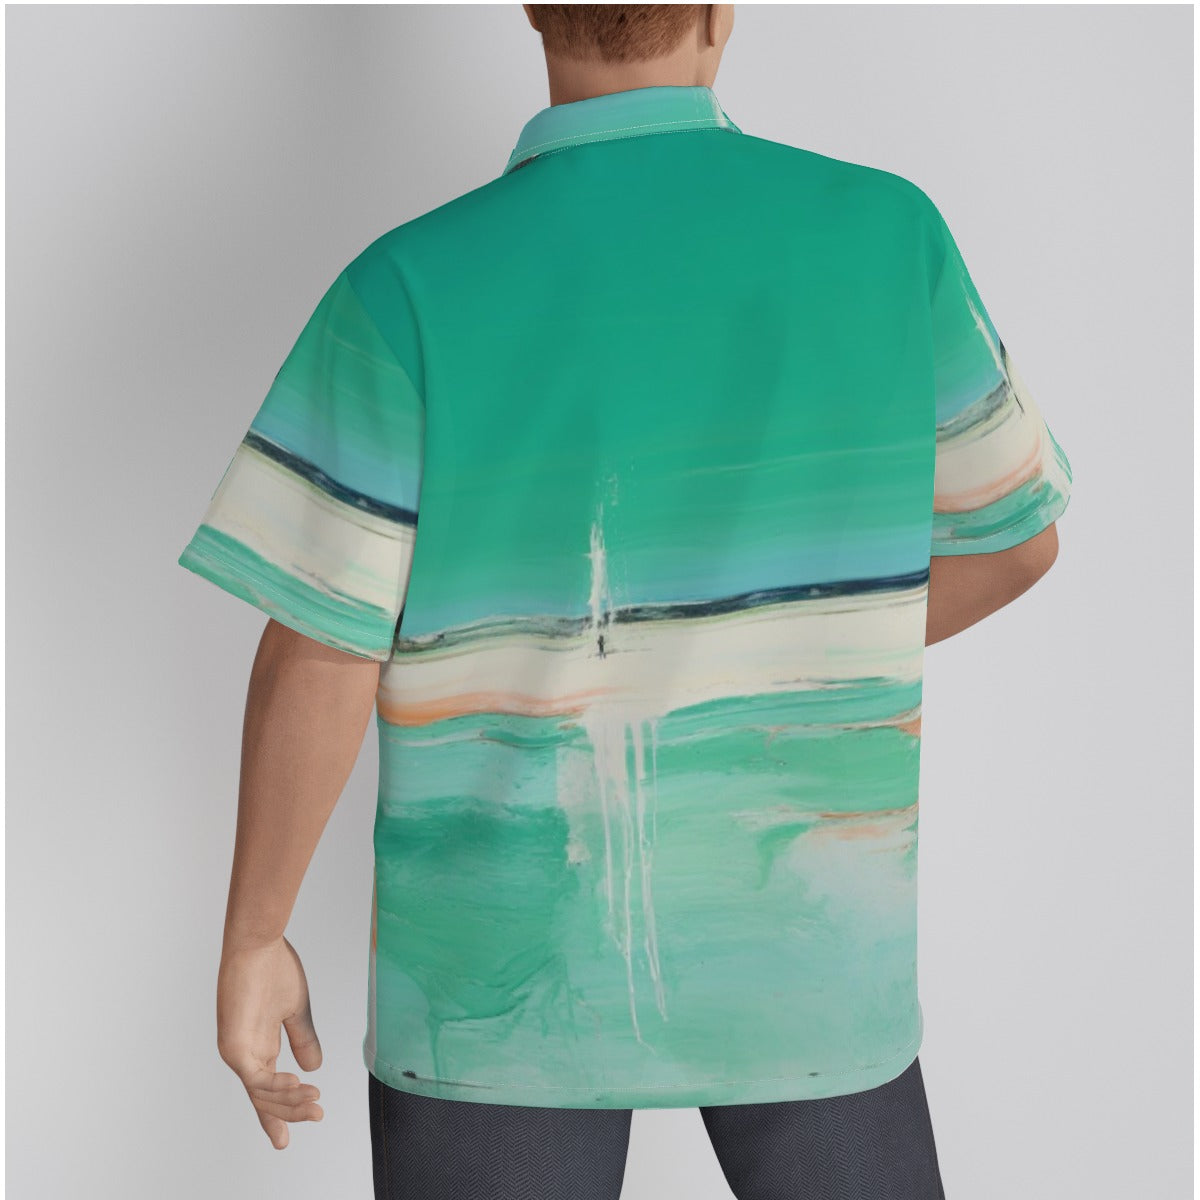 The Green Line Resort Shirt